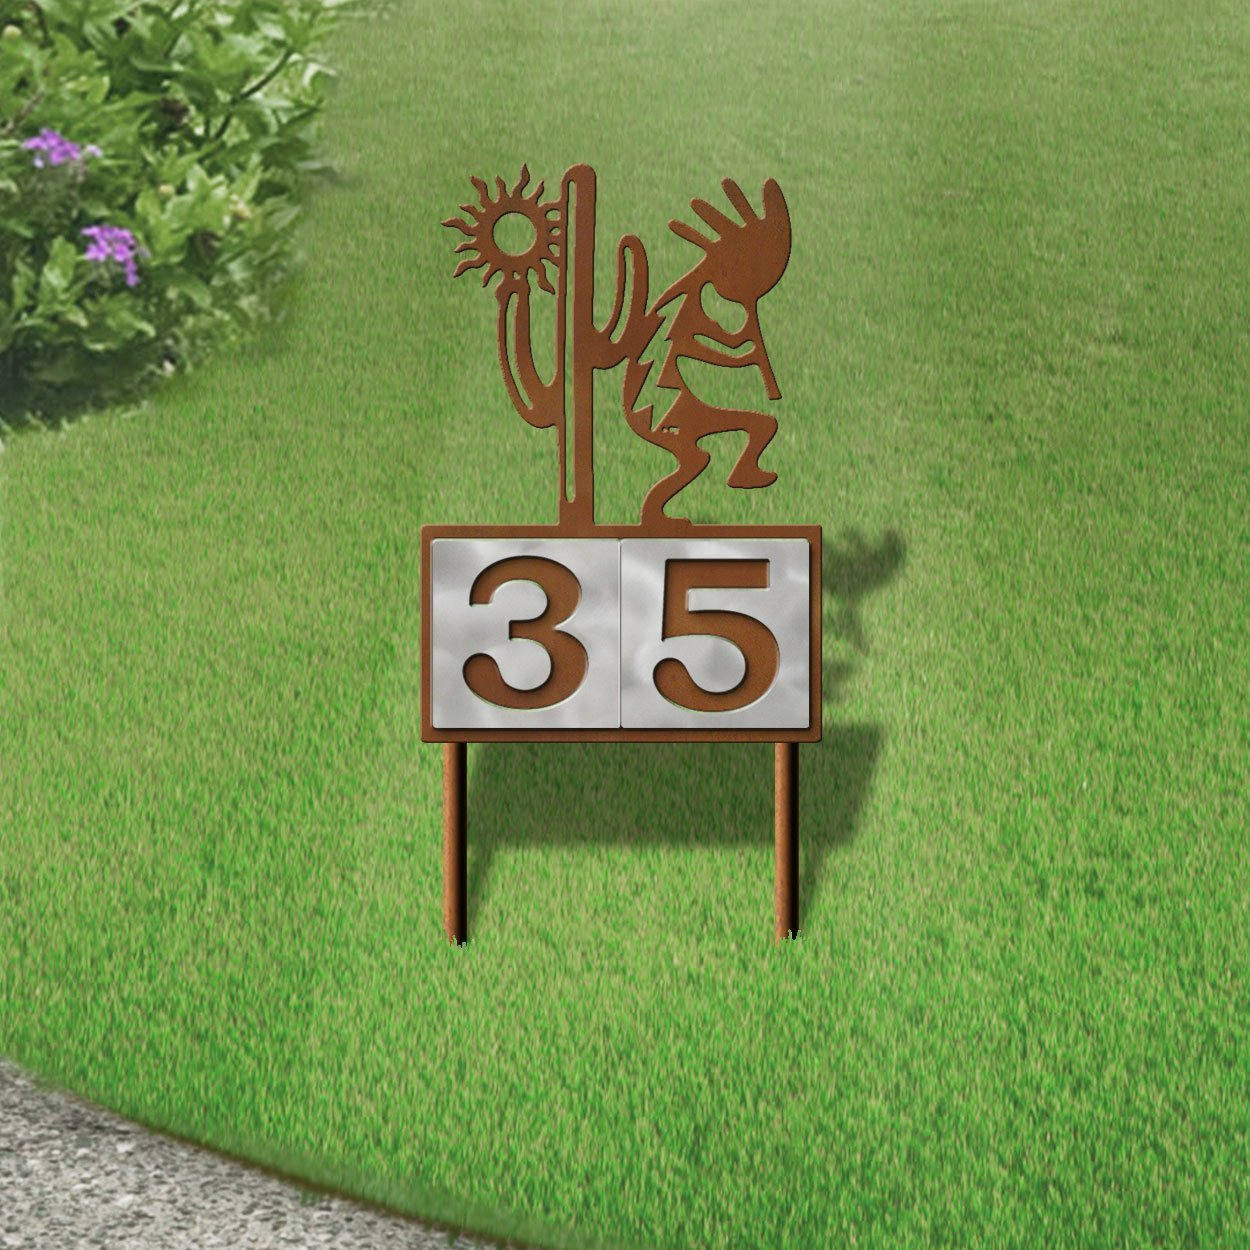 610152 - Kokopelli Desert Scene Design 2-Digit Horizontal 6-inch Tile Outdoor House Numbers Yard Sign